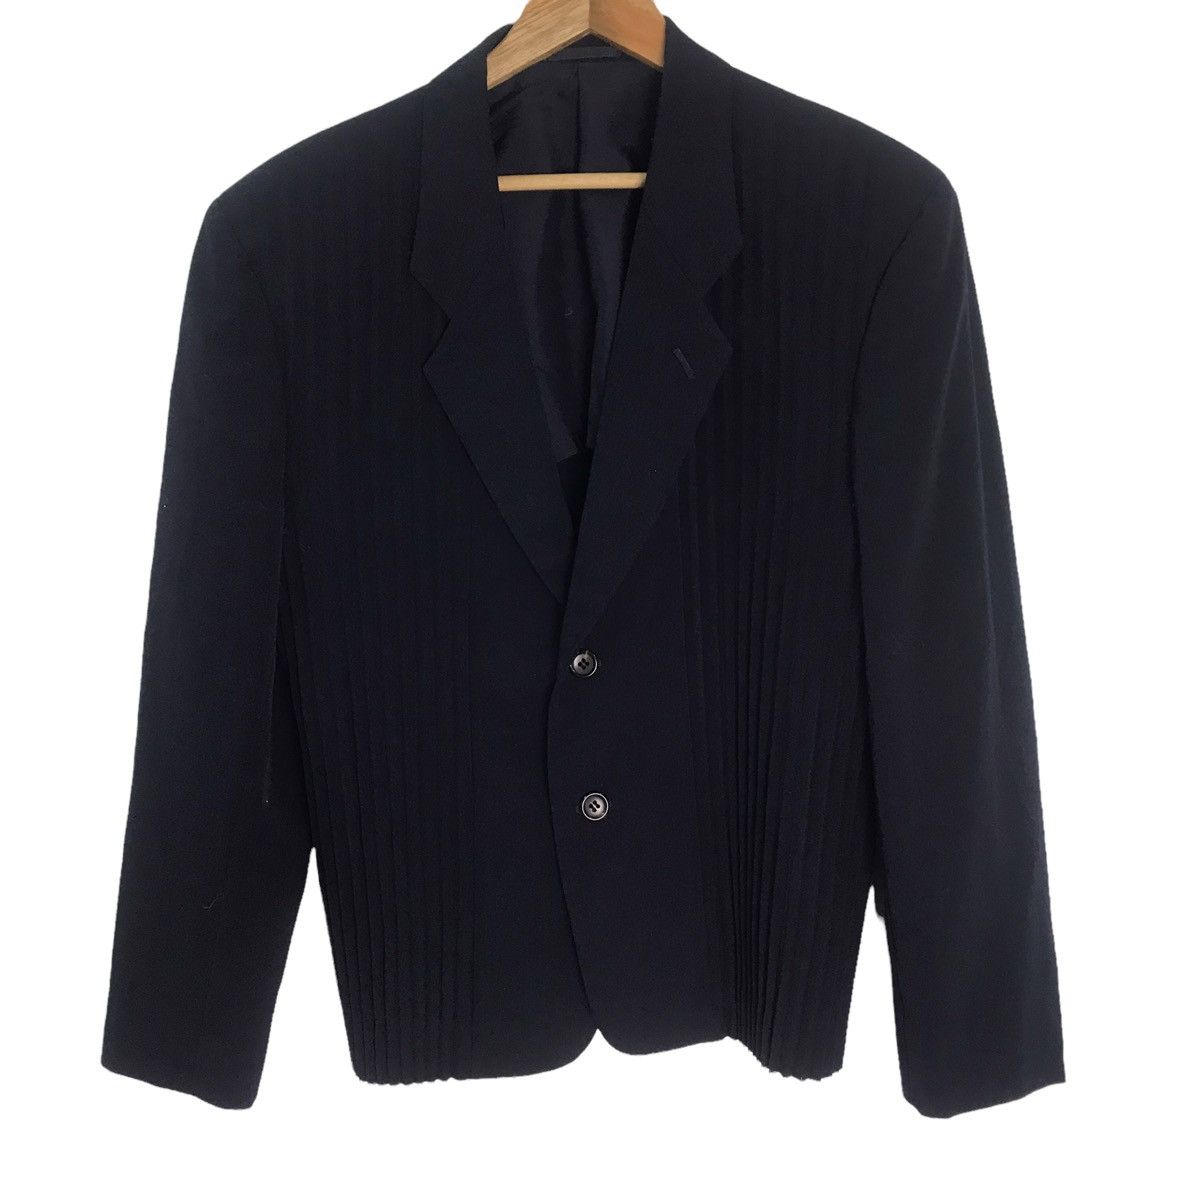 Cdg homme plus wool pleated suit jacket - 2